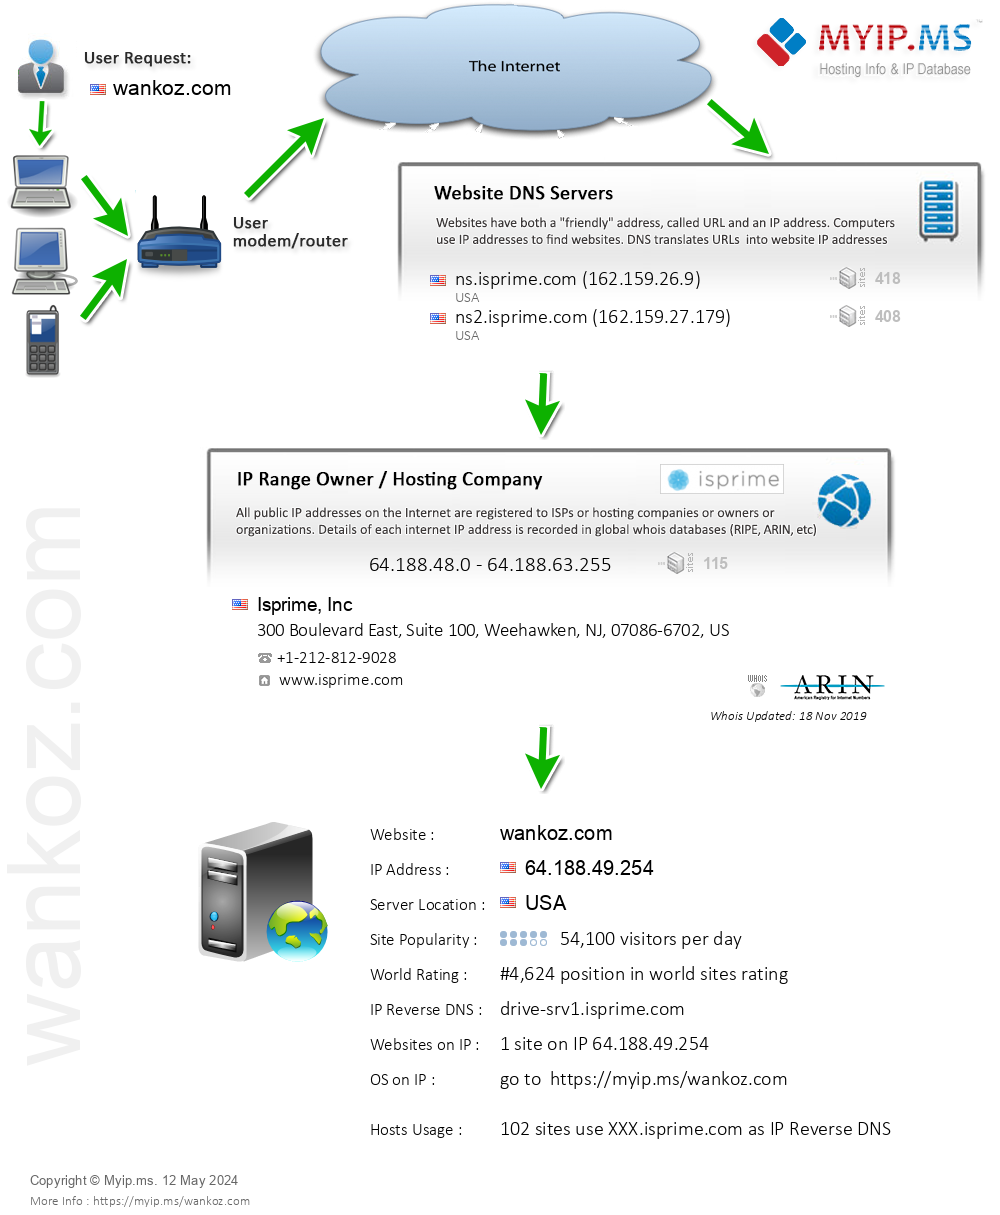 Wankoz.com - Website Hosting Visual IP Diagram